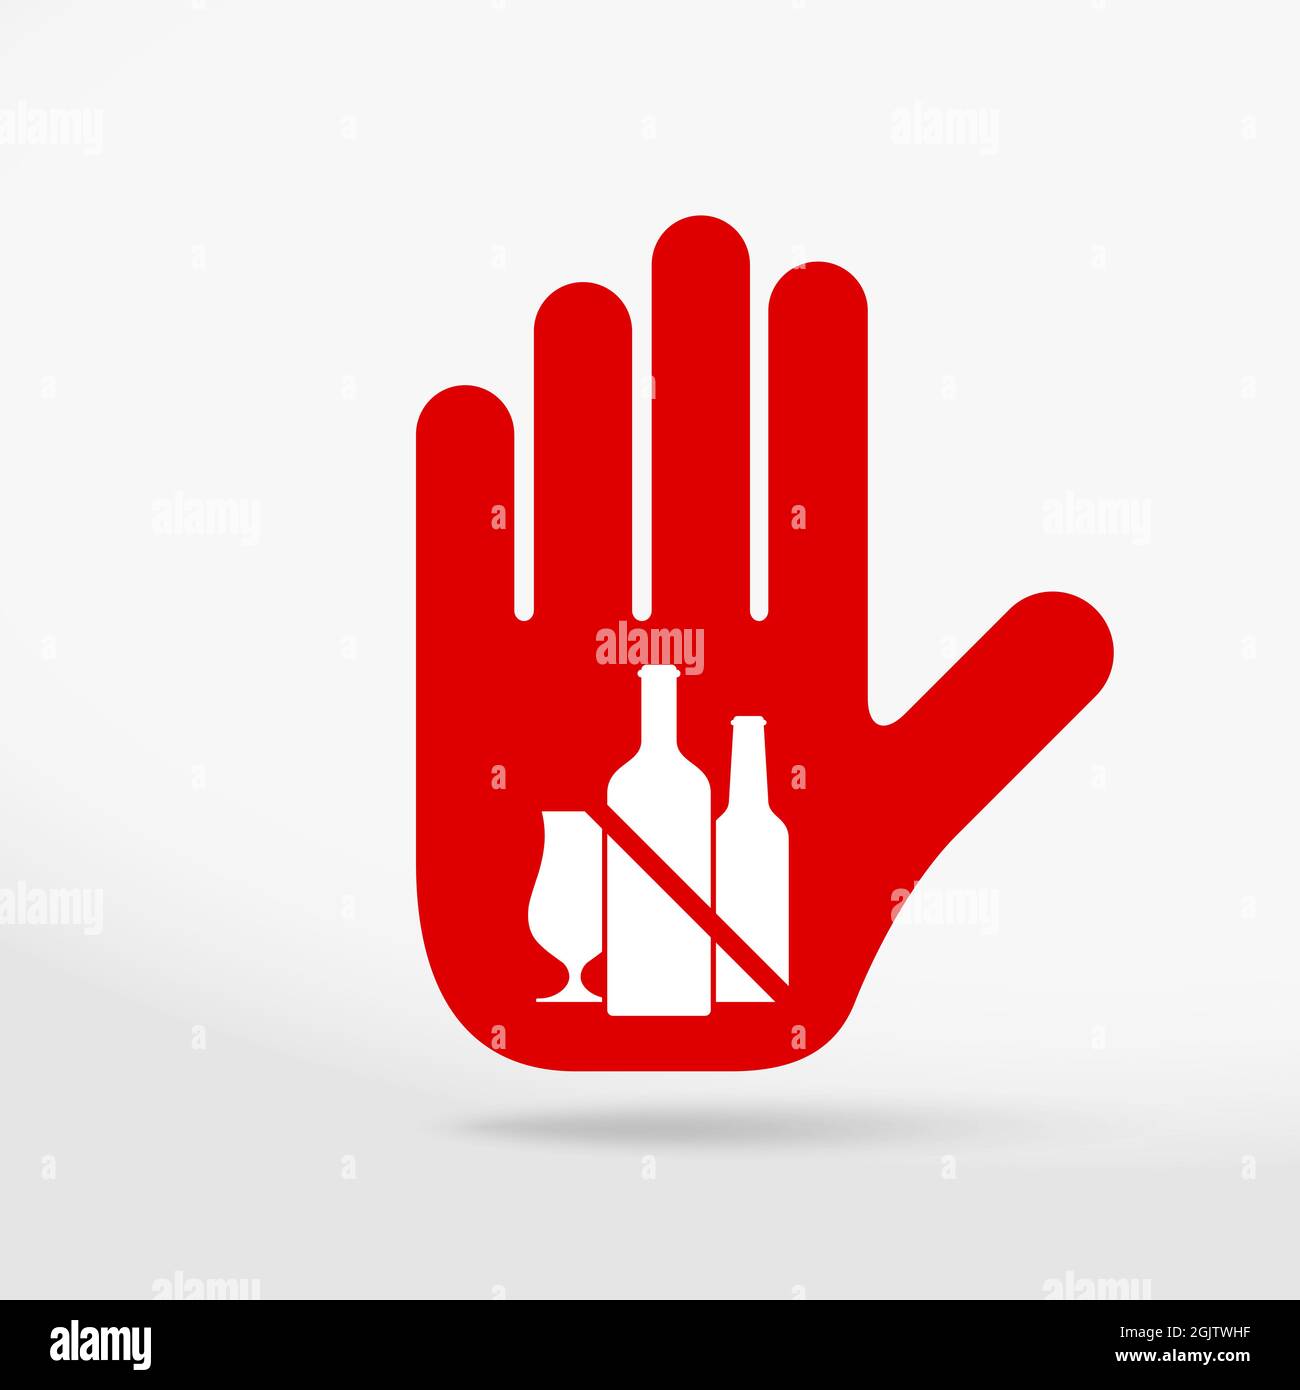 No alcohol prohibition sign. Stop hand icon. No symbol, halt gesture, prohibited symbol isolated on white. illustration. Stock Photo